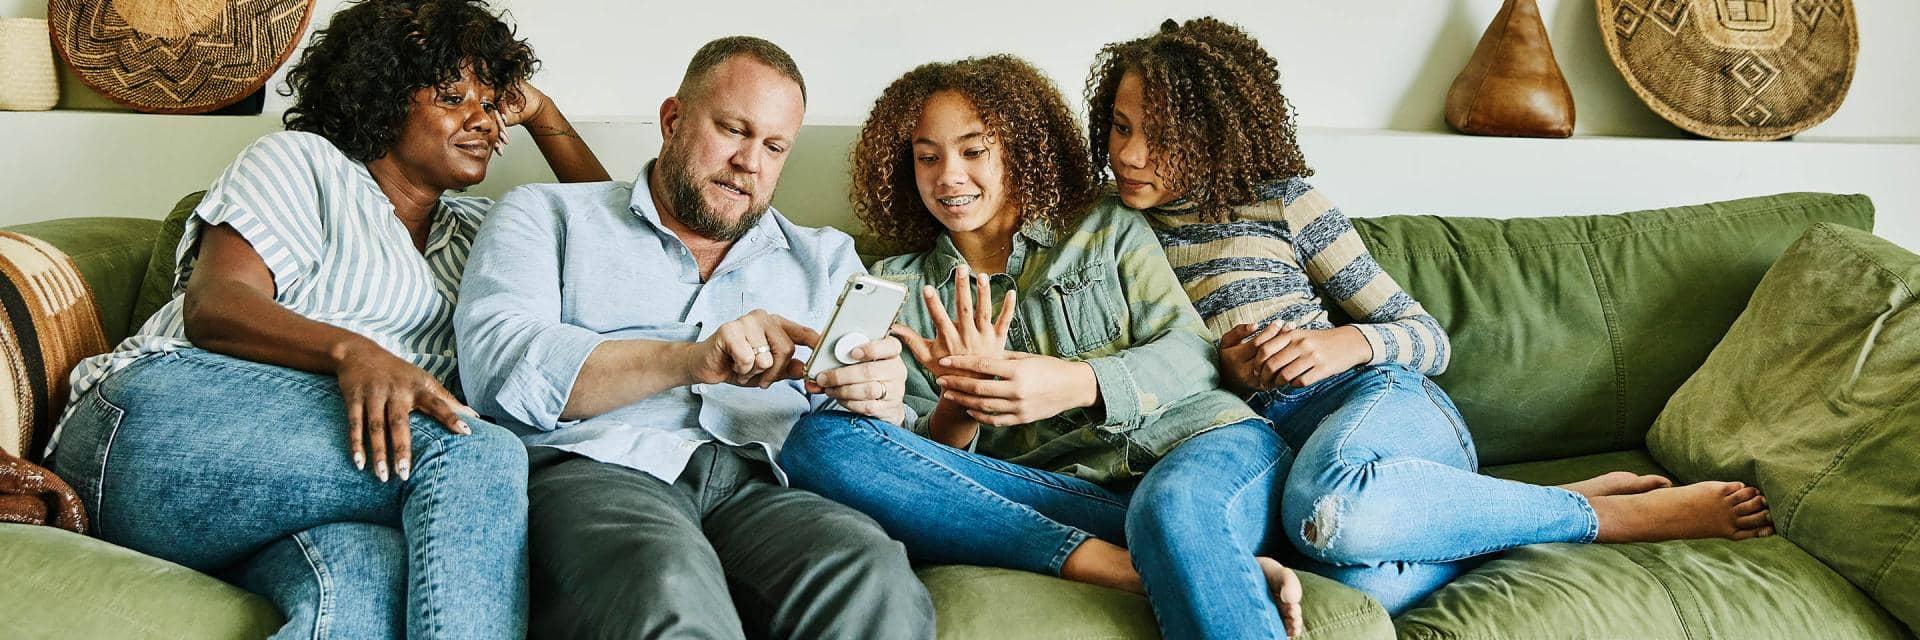 Family enjoying tech entertainment